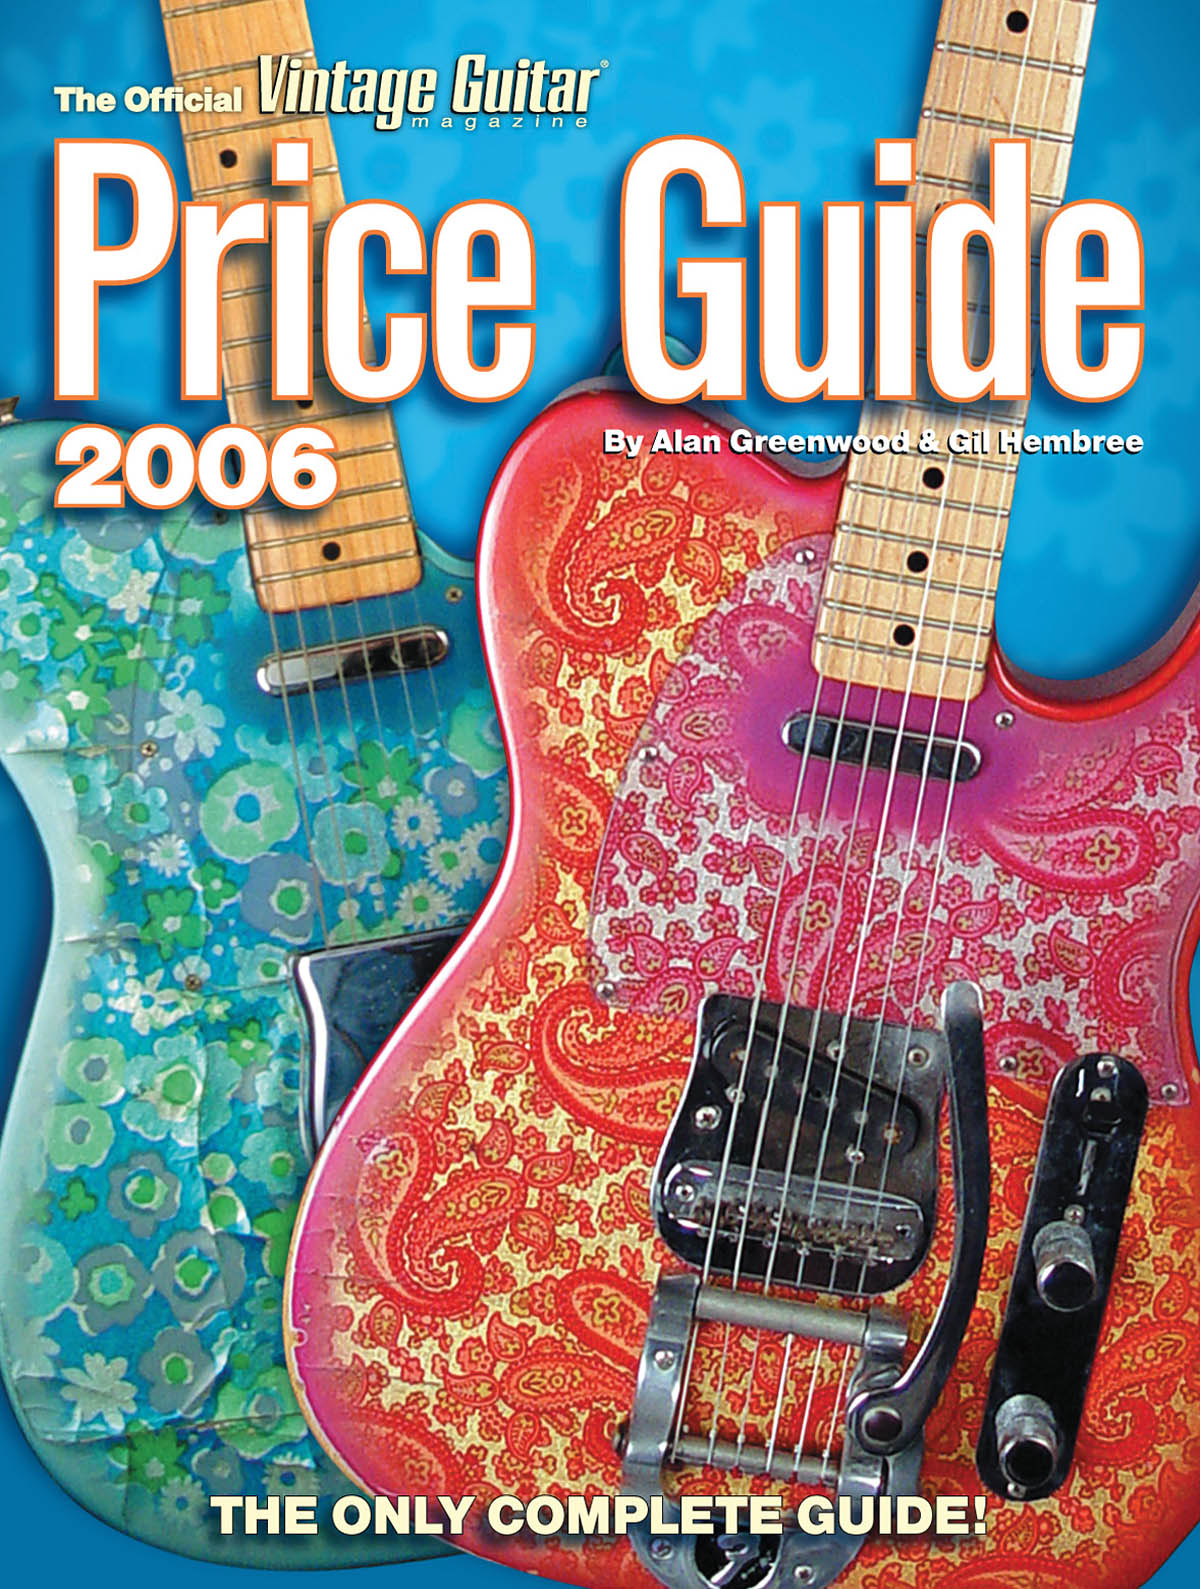 Vintage Guitar Magazine Price Guide - 2006 Edition